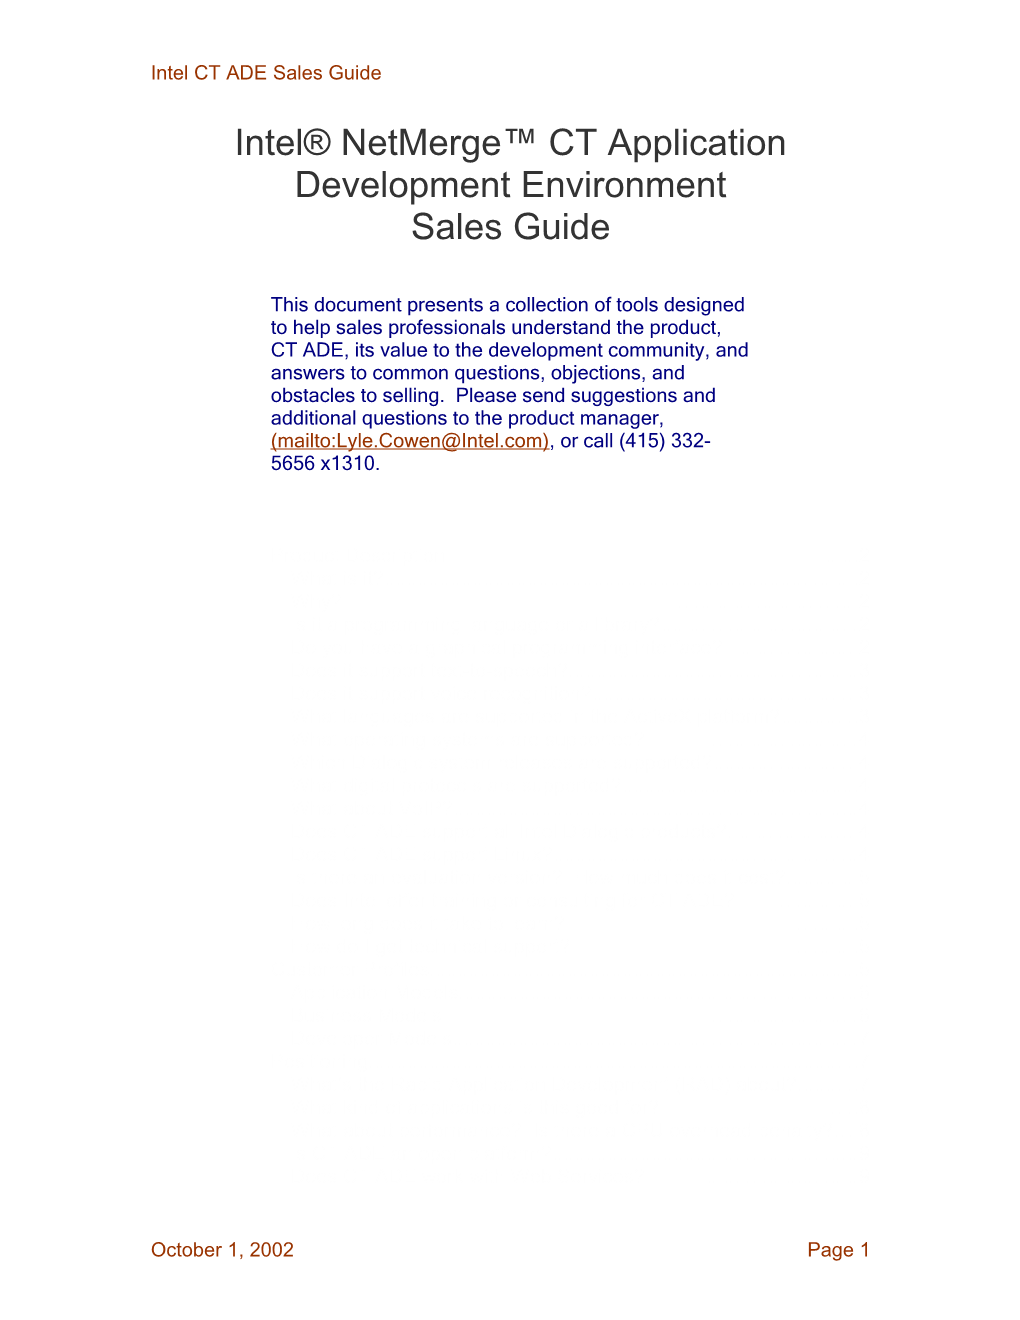 Intel Netmerge CT Application Development Environment